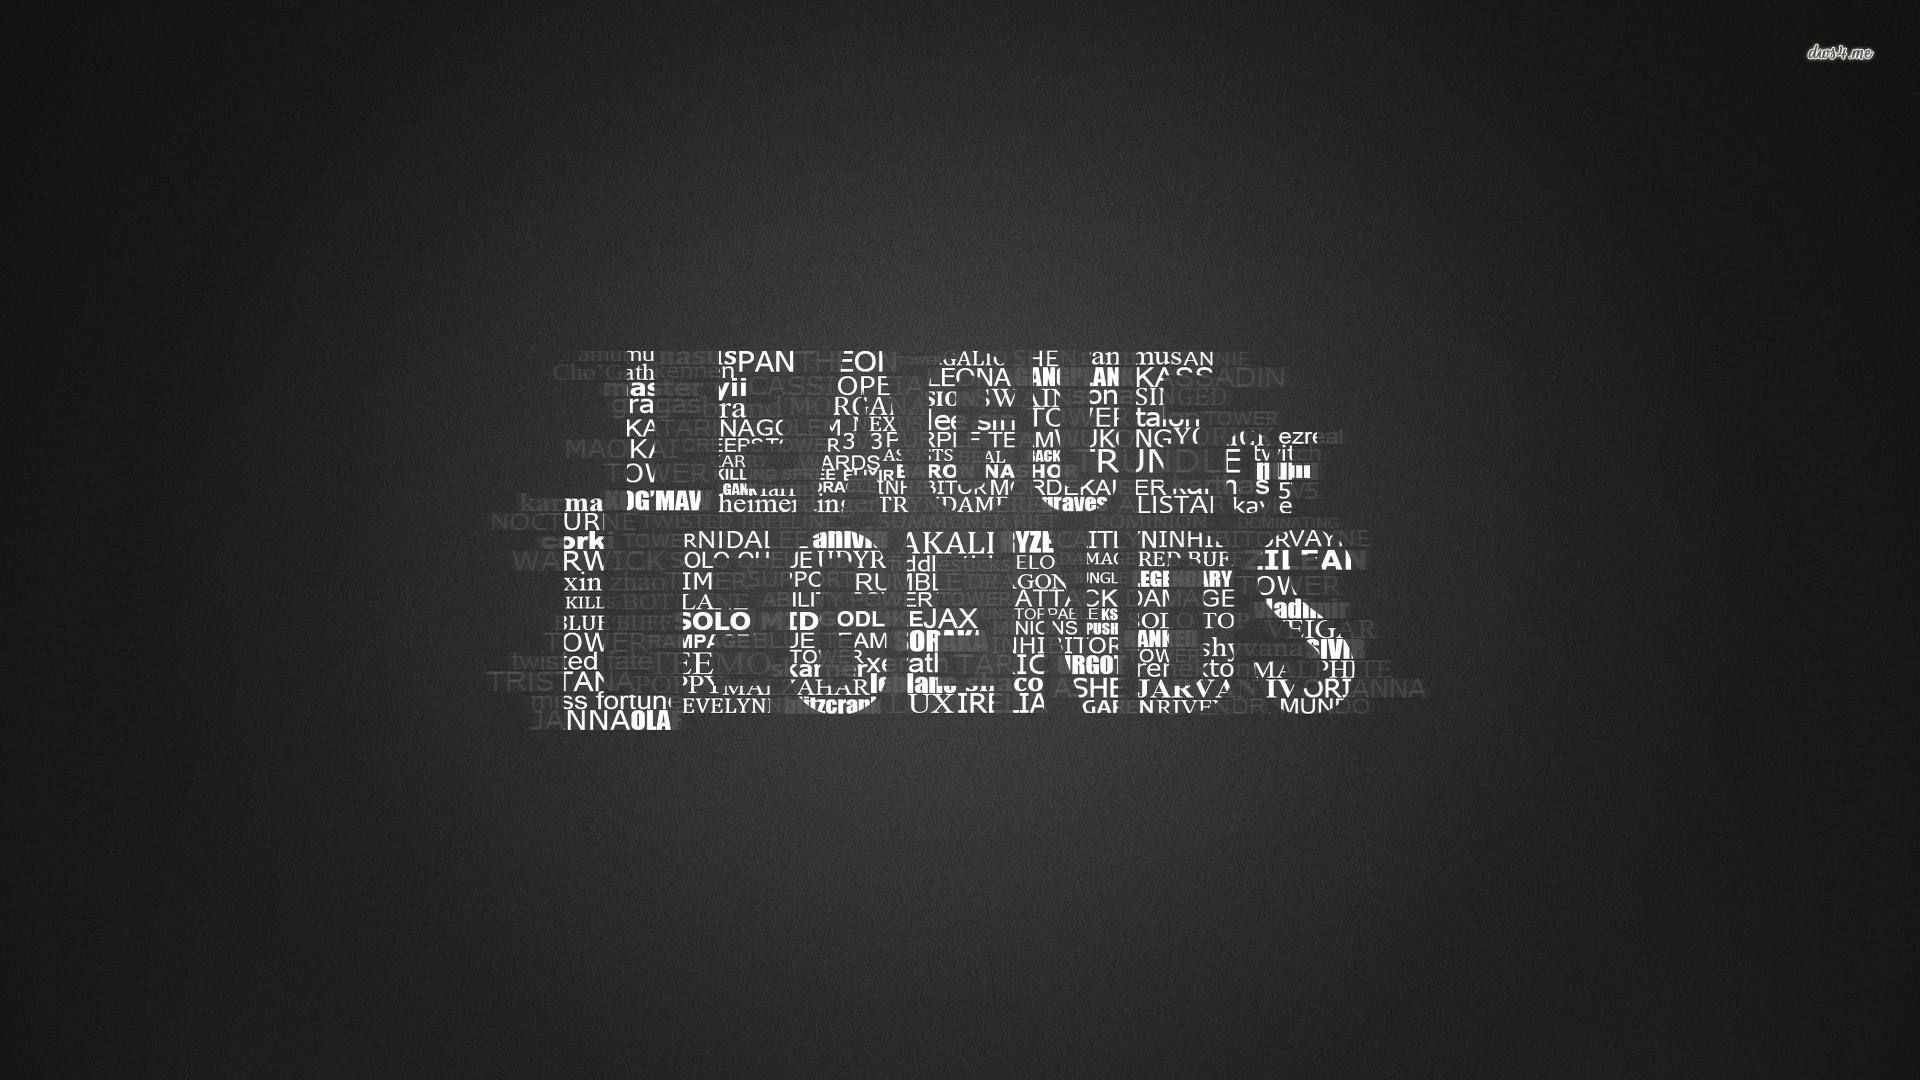 League of Legends Wallpaper - MixHD wallpapers